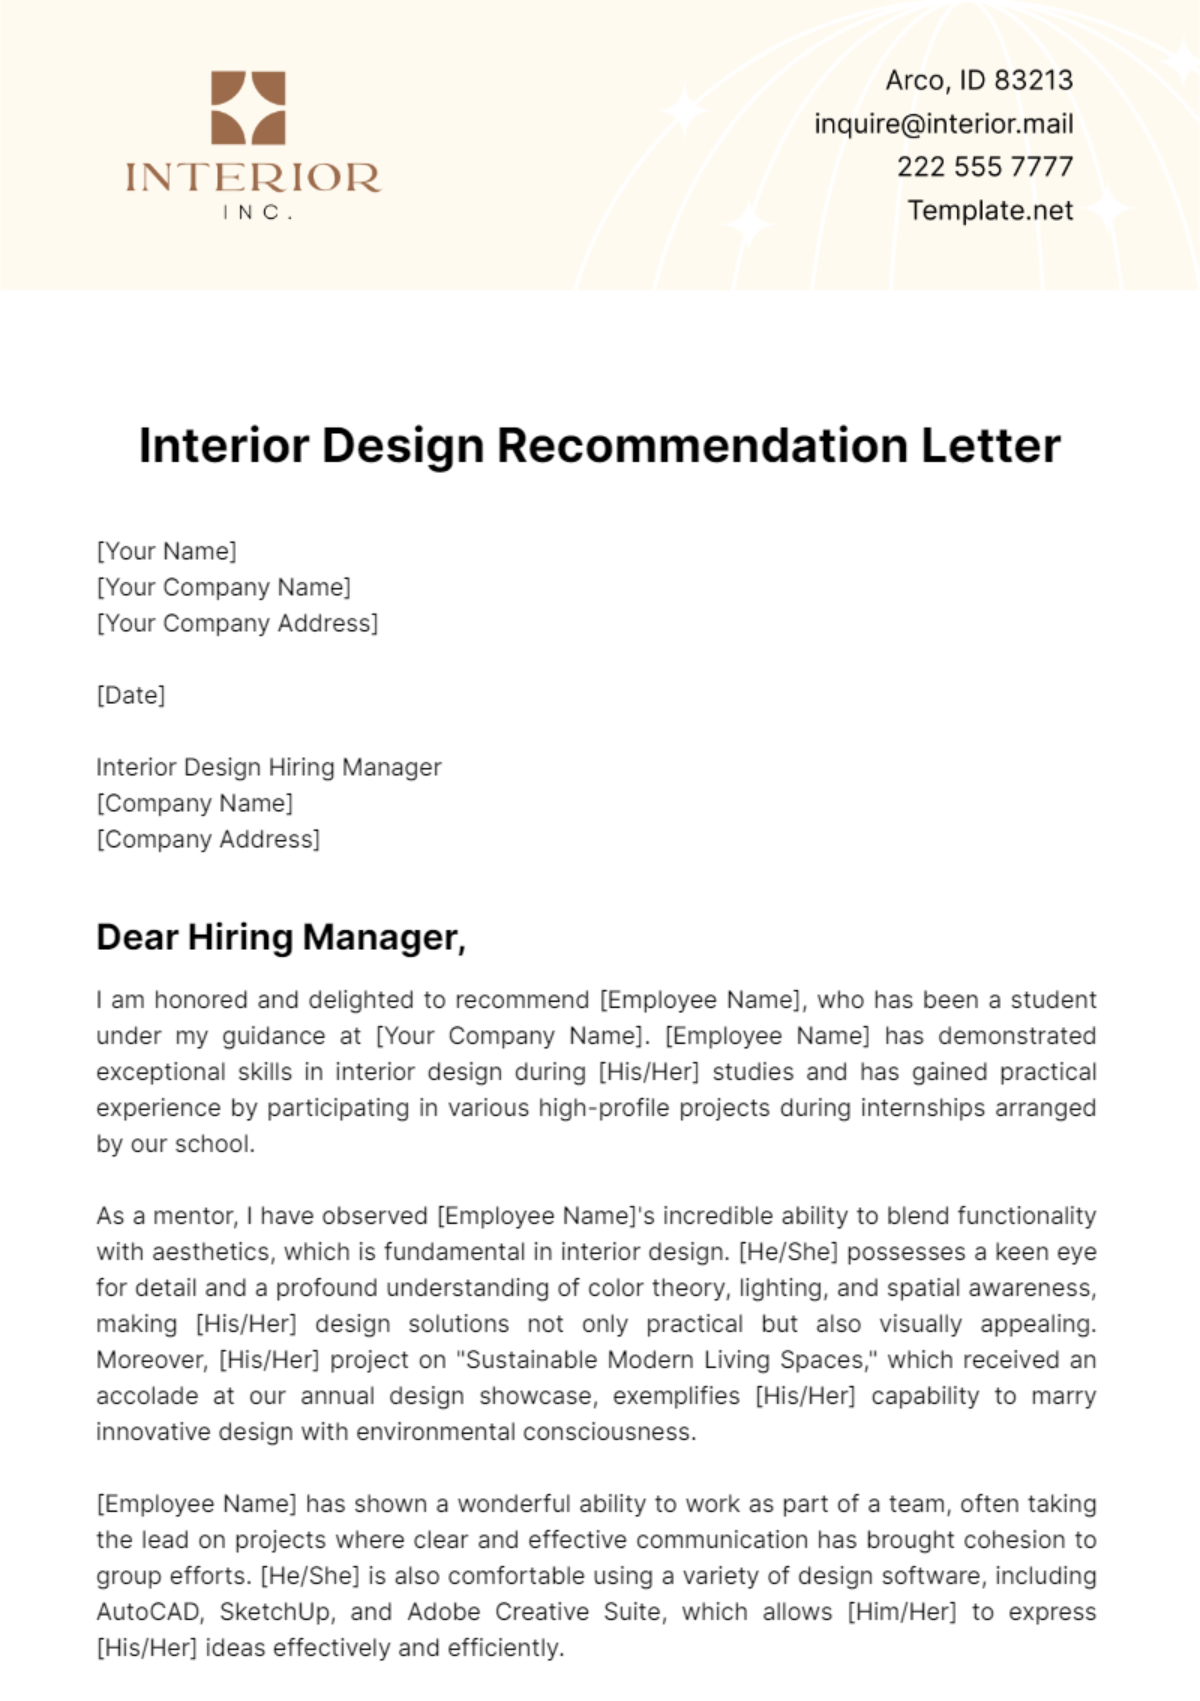 Interior Design Recommendation Letter Template